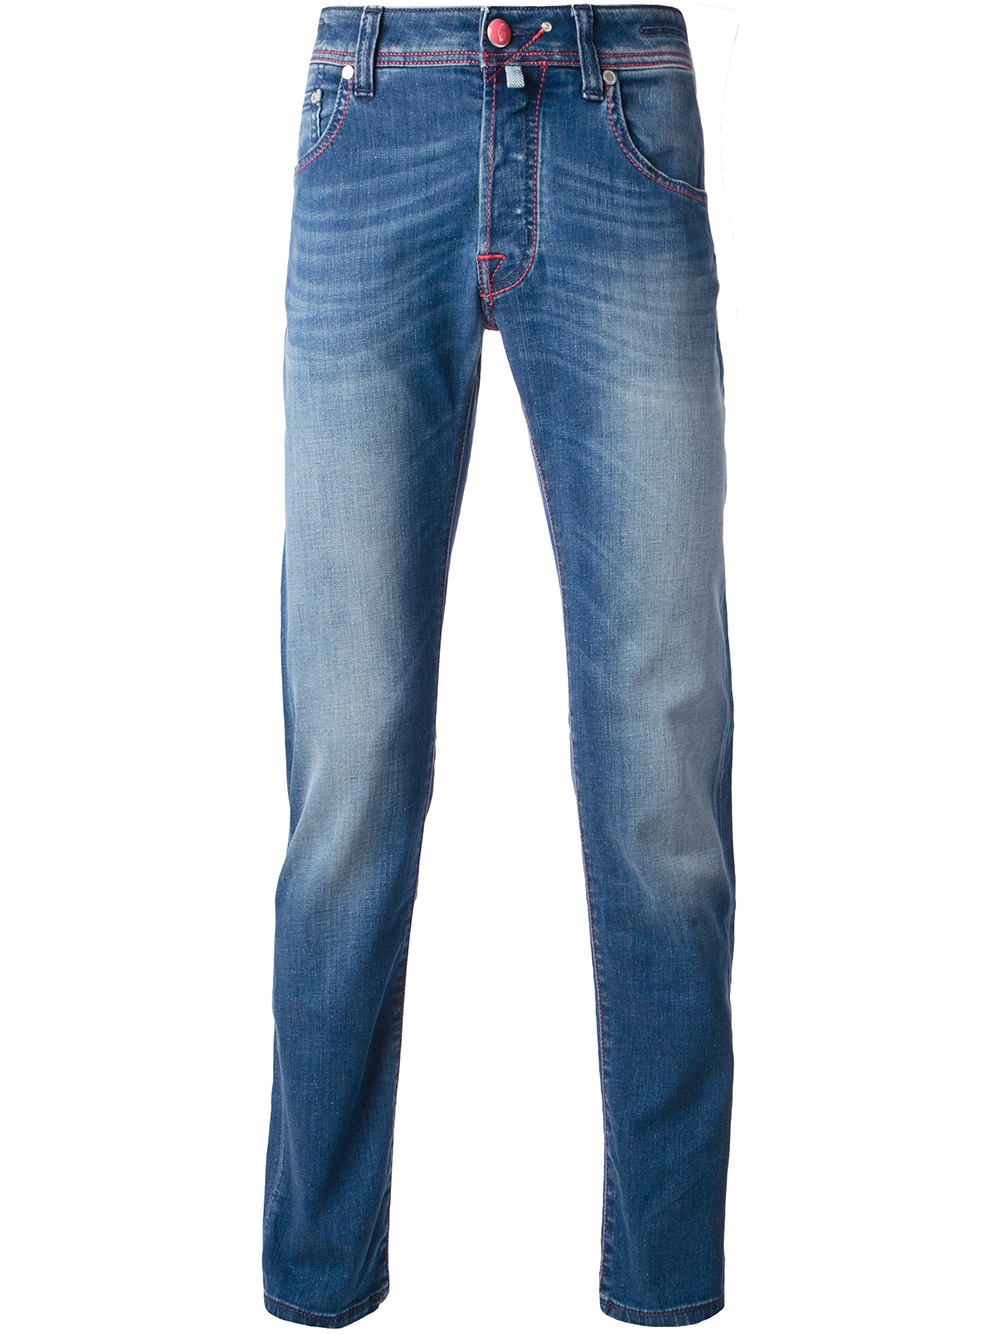 Jacob Cohen Slim Fit Jeans in Blue for Men - Lyst